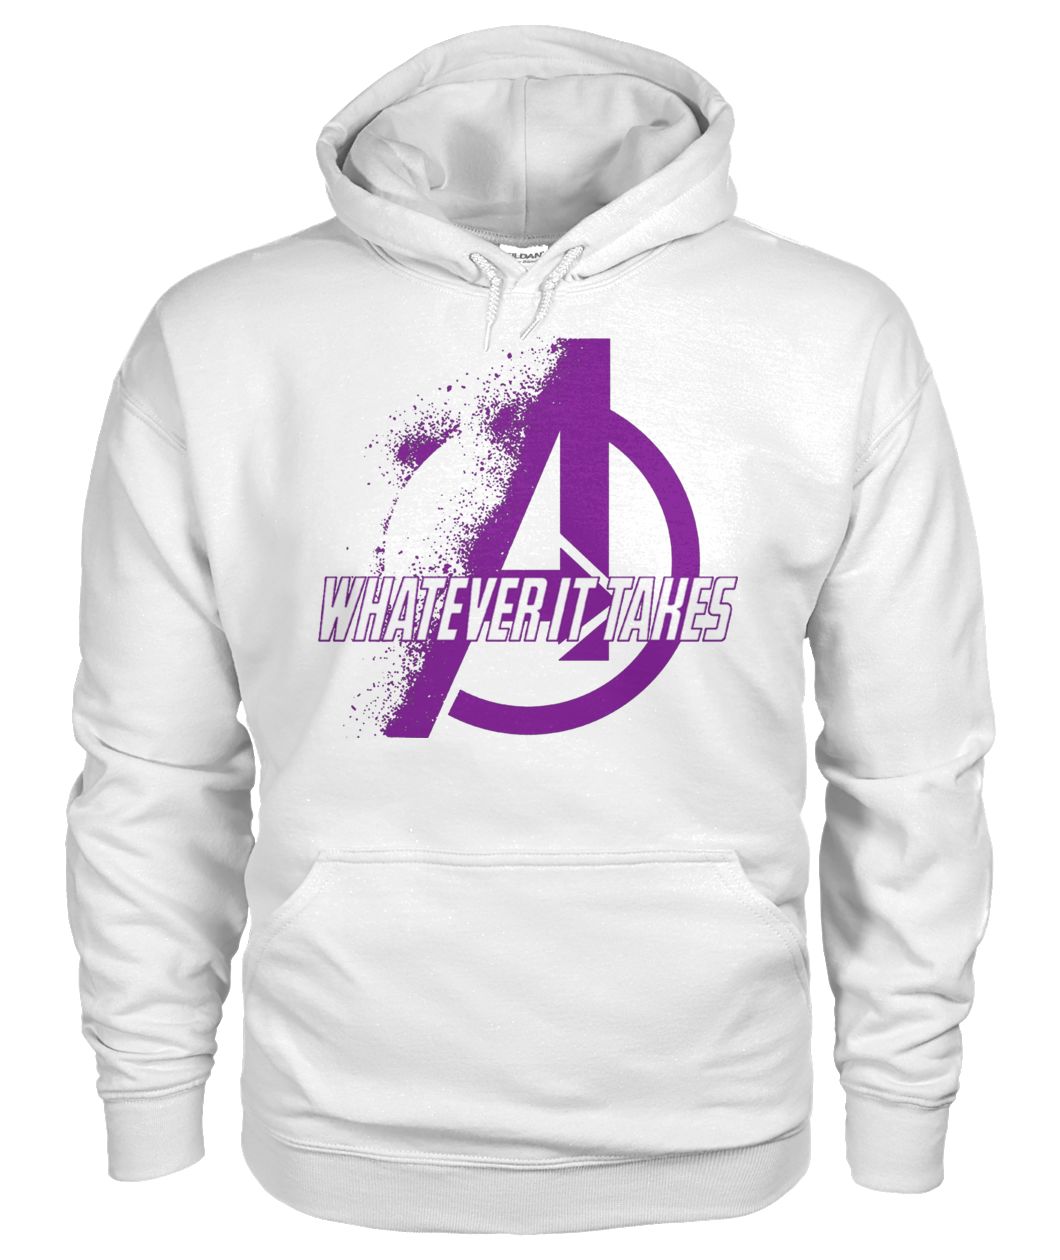 Avengers endgame whatever it takes gildan hoodie